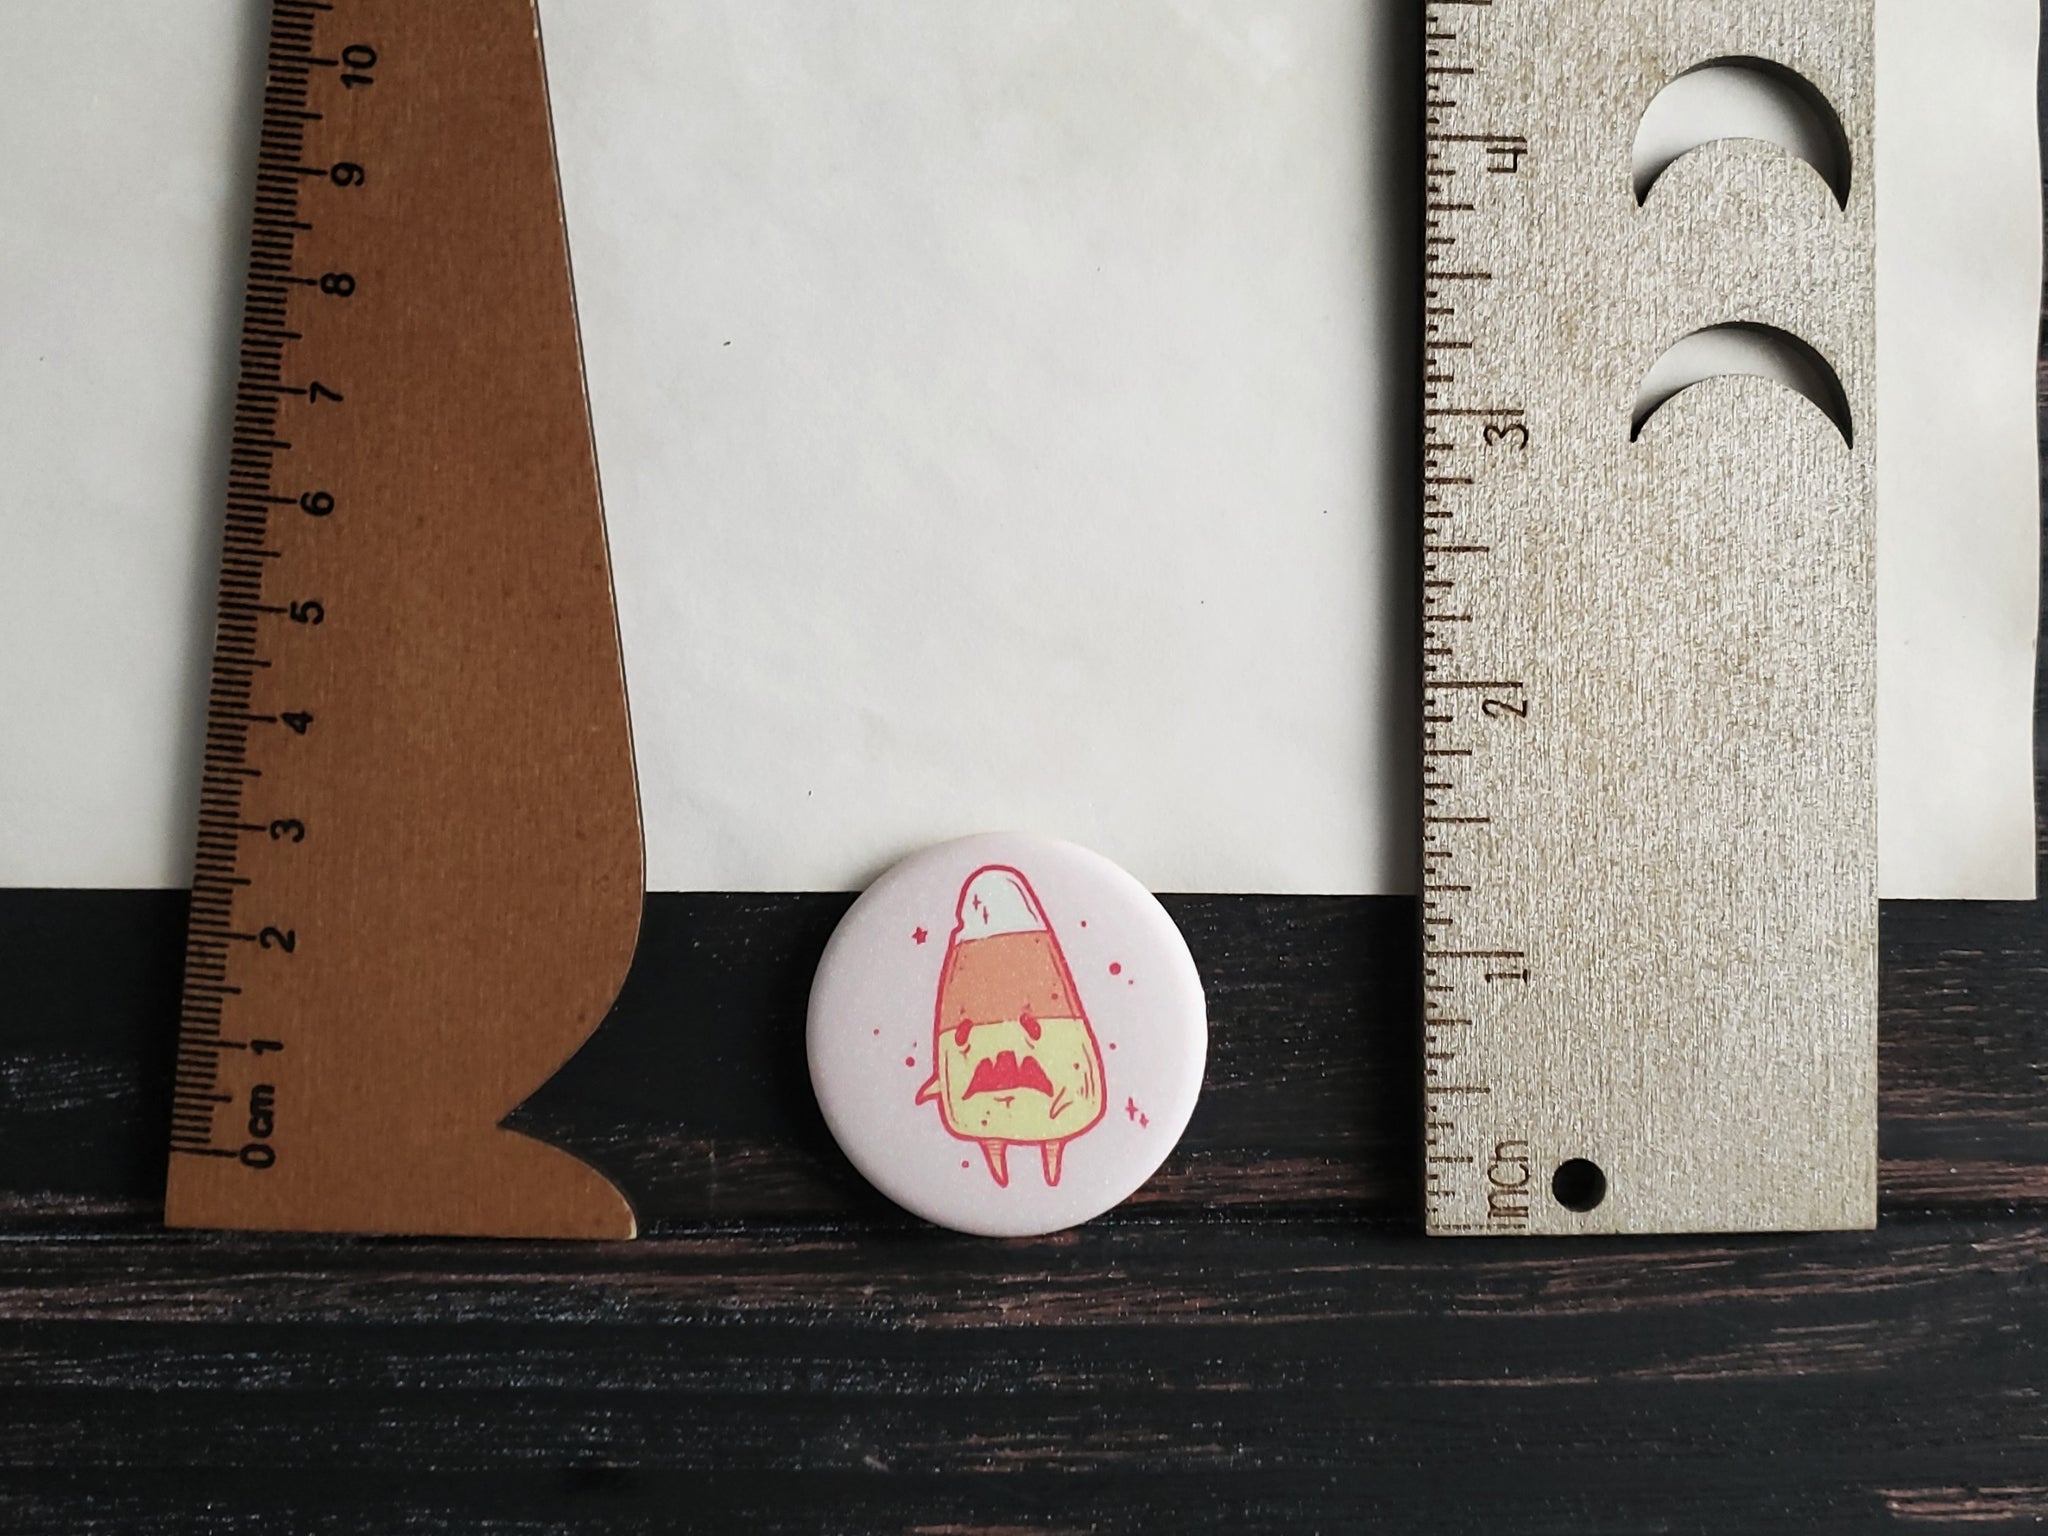 Candy Corn Creep pin badge